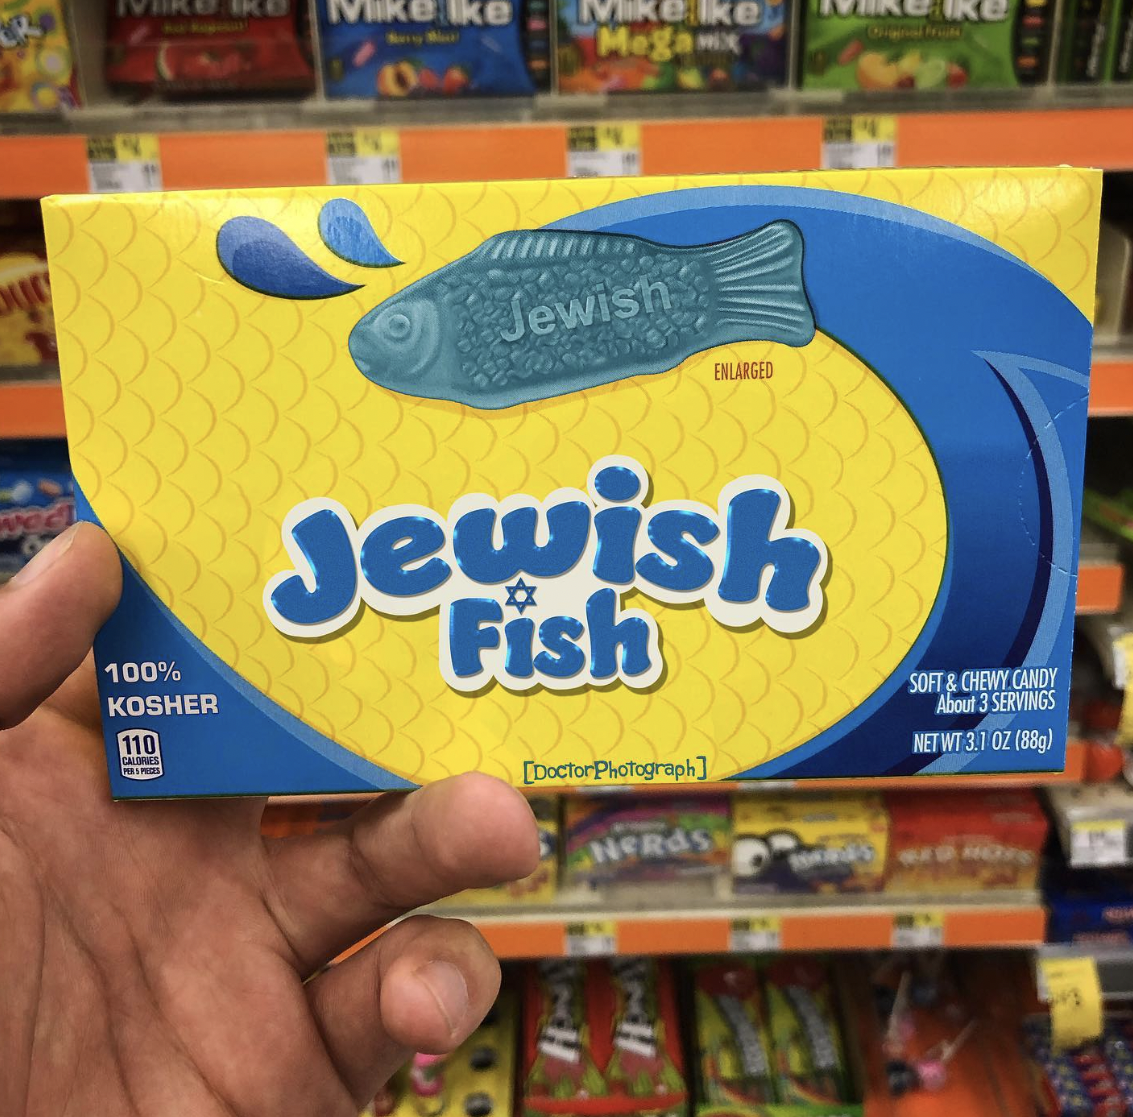 doctor photograph memes - sweet jewish fish - 100% Kosher 110 Bike viiketike Megamx Jewish Enlarged Jewish Fish H Doctor Photograph Neras Soft&Chewy Candy About 3 Servings Net Wt 3.10Z 889